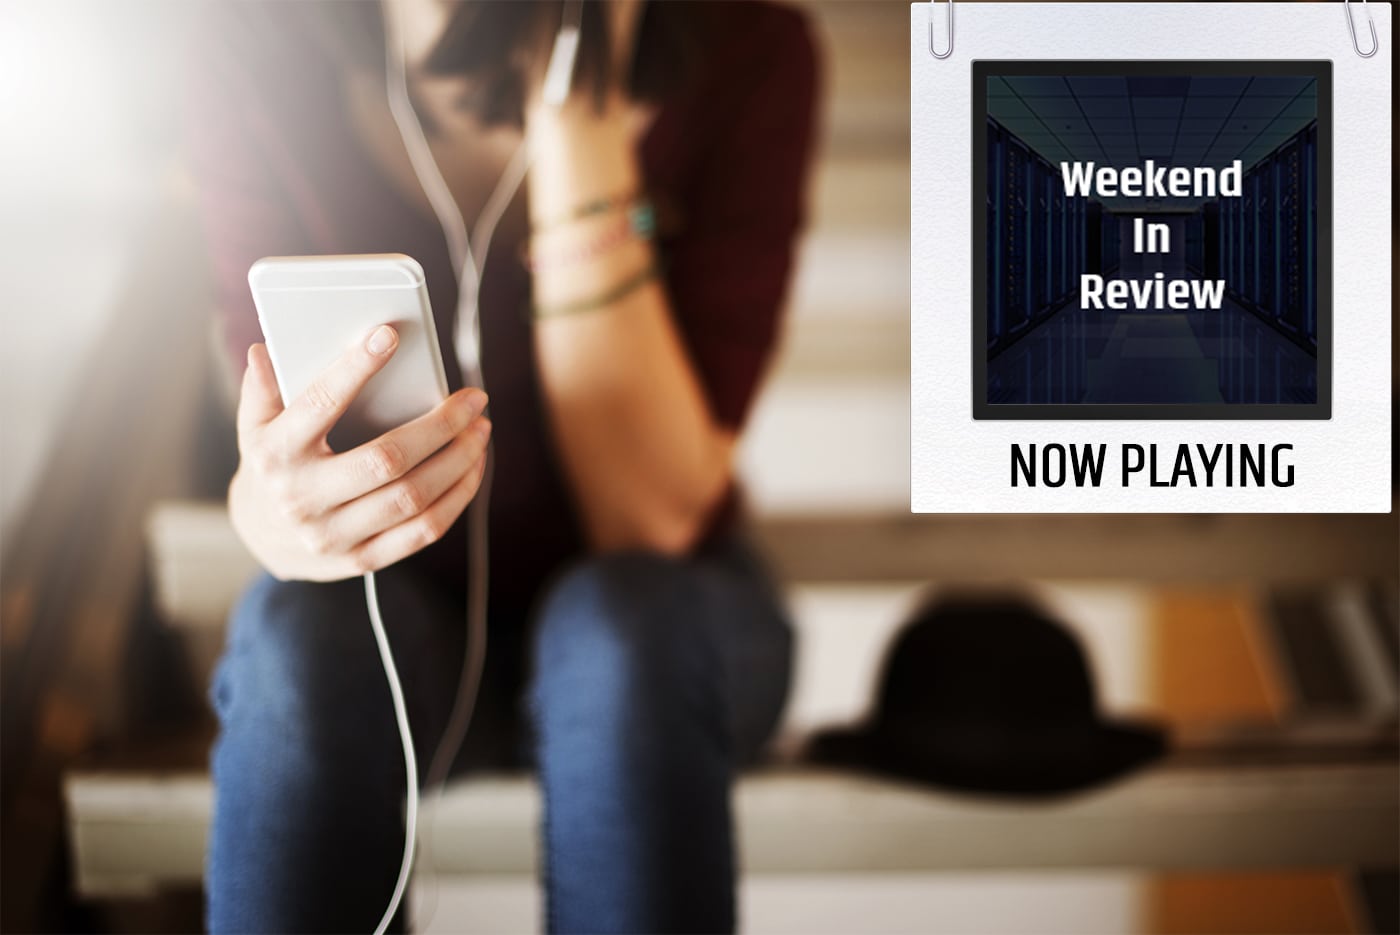 "weekend in review"